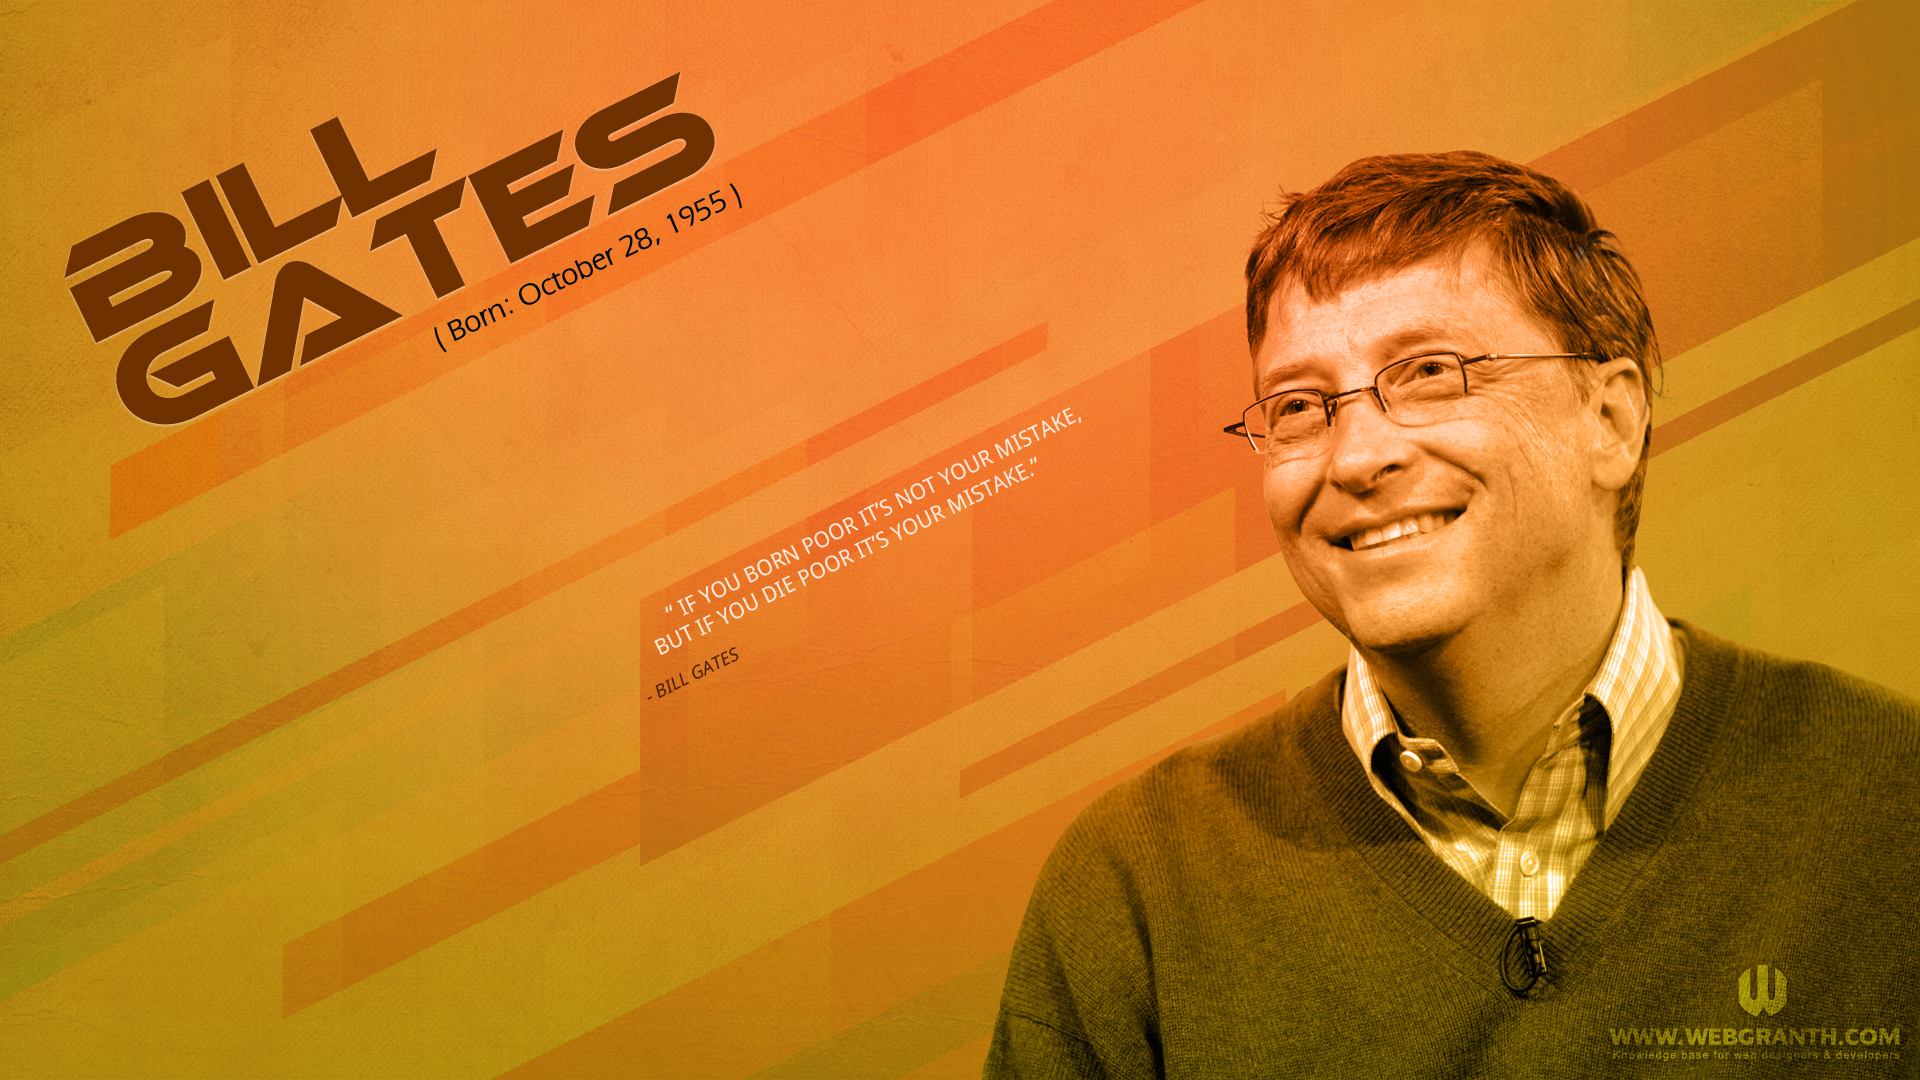 Download July 2013 calendar wallpaper for Microsoft founder Bill Gates 1920x1080